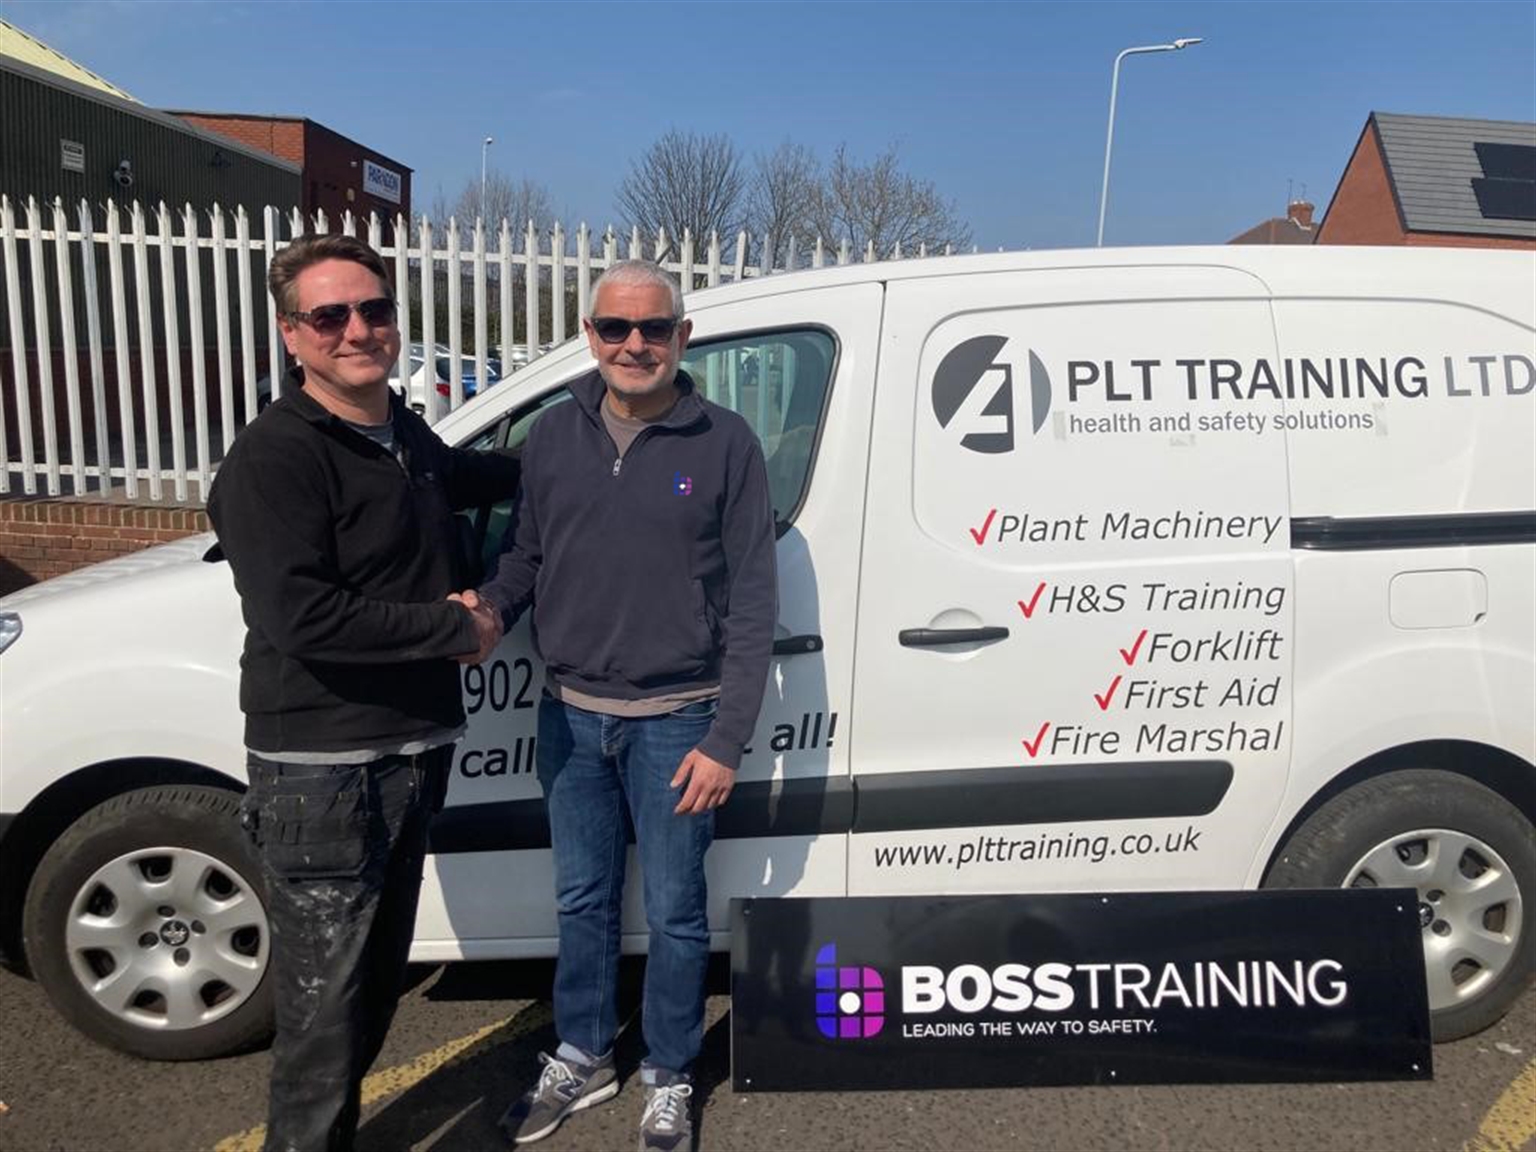 Boss Training partners with PLT Training